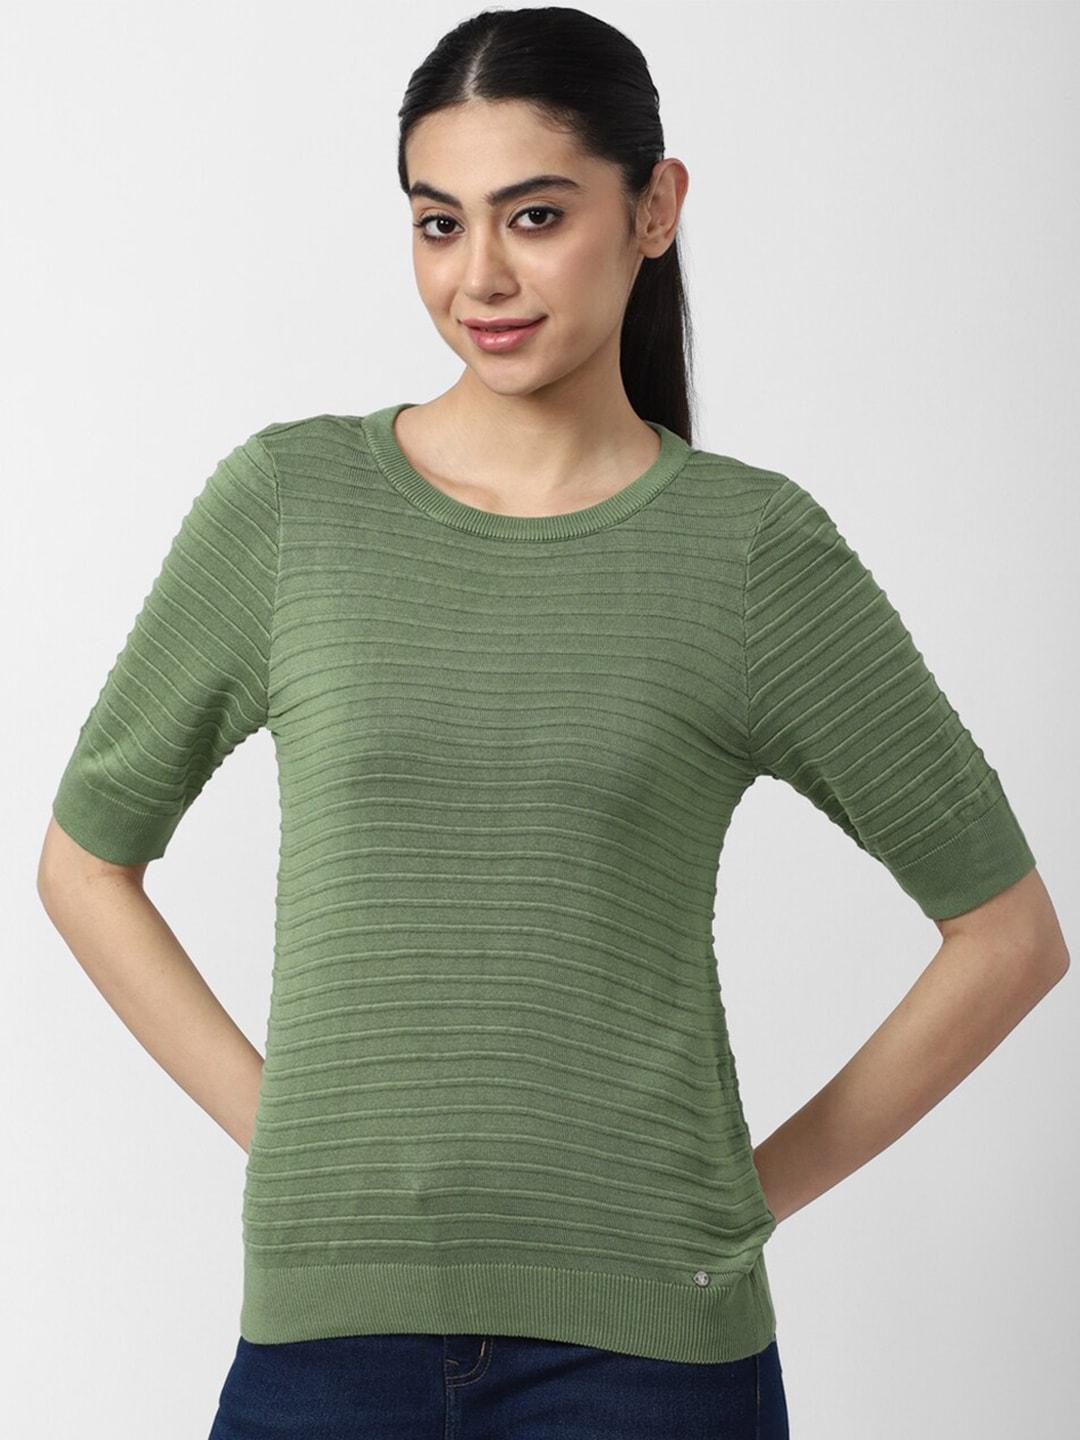 van-heusen-woman-green-striped-top